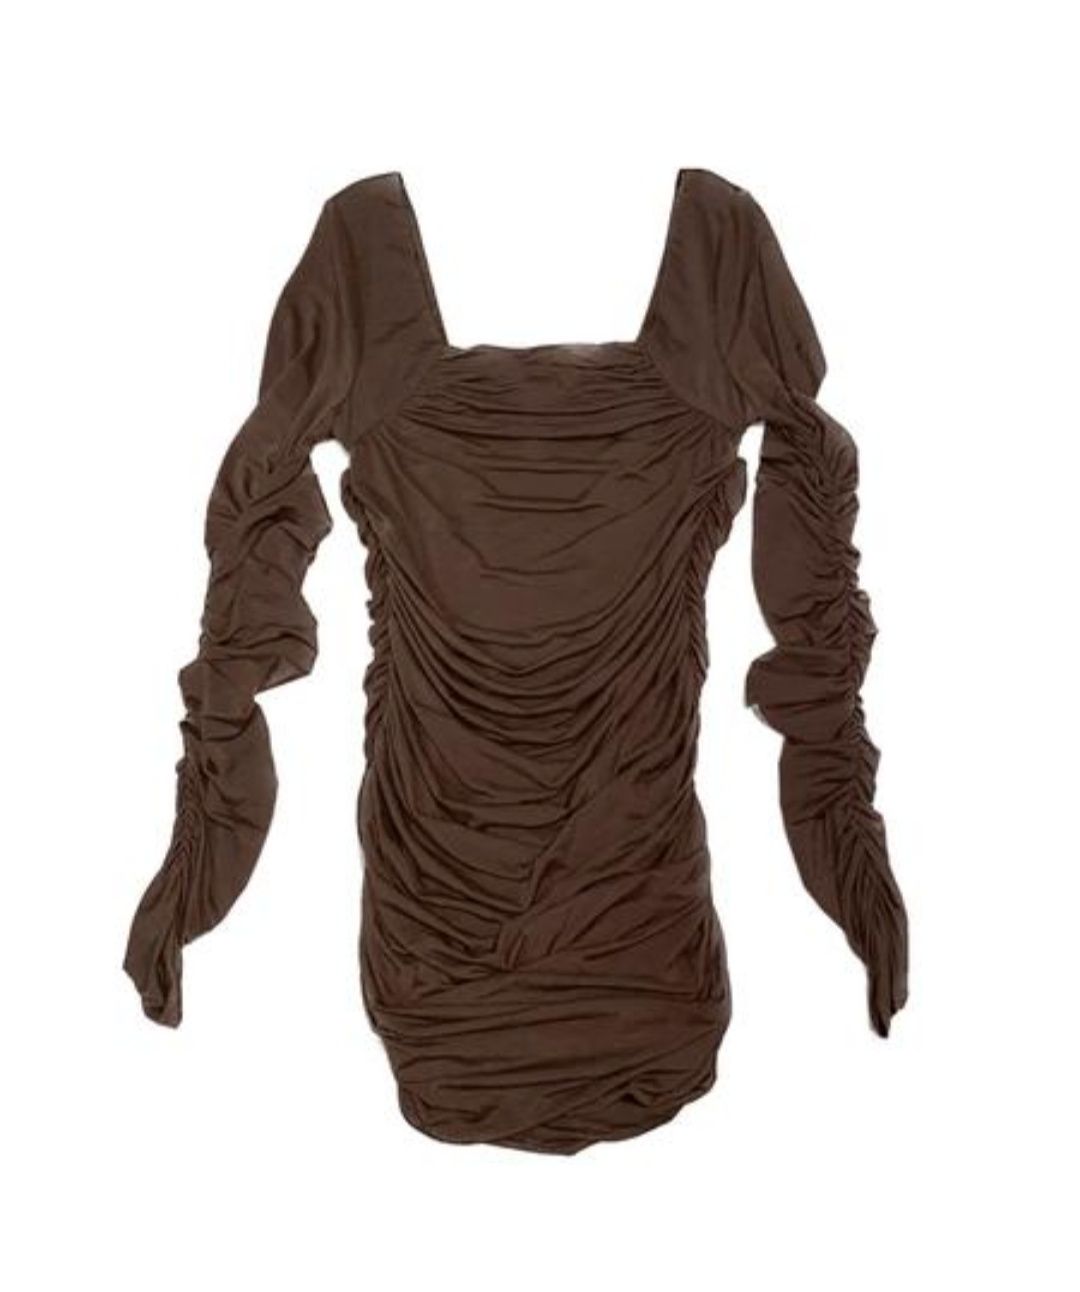 Популярне стильне платтячко з затяжками Boux avenue